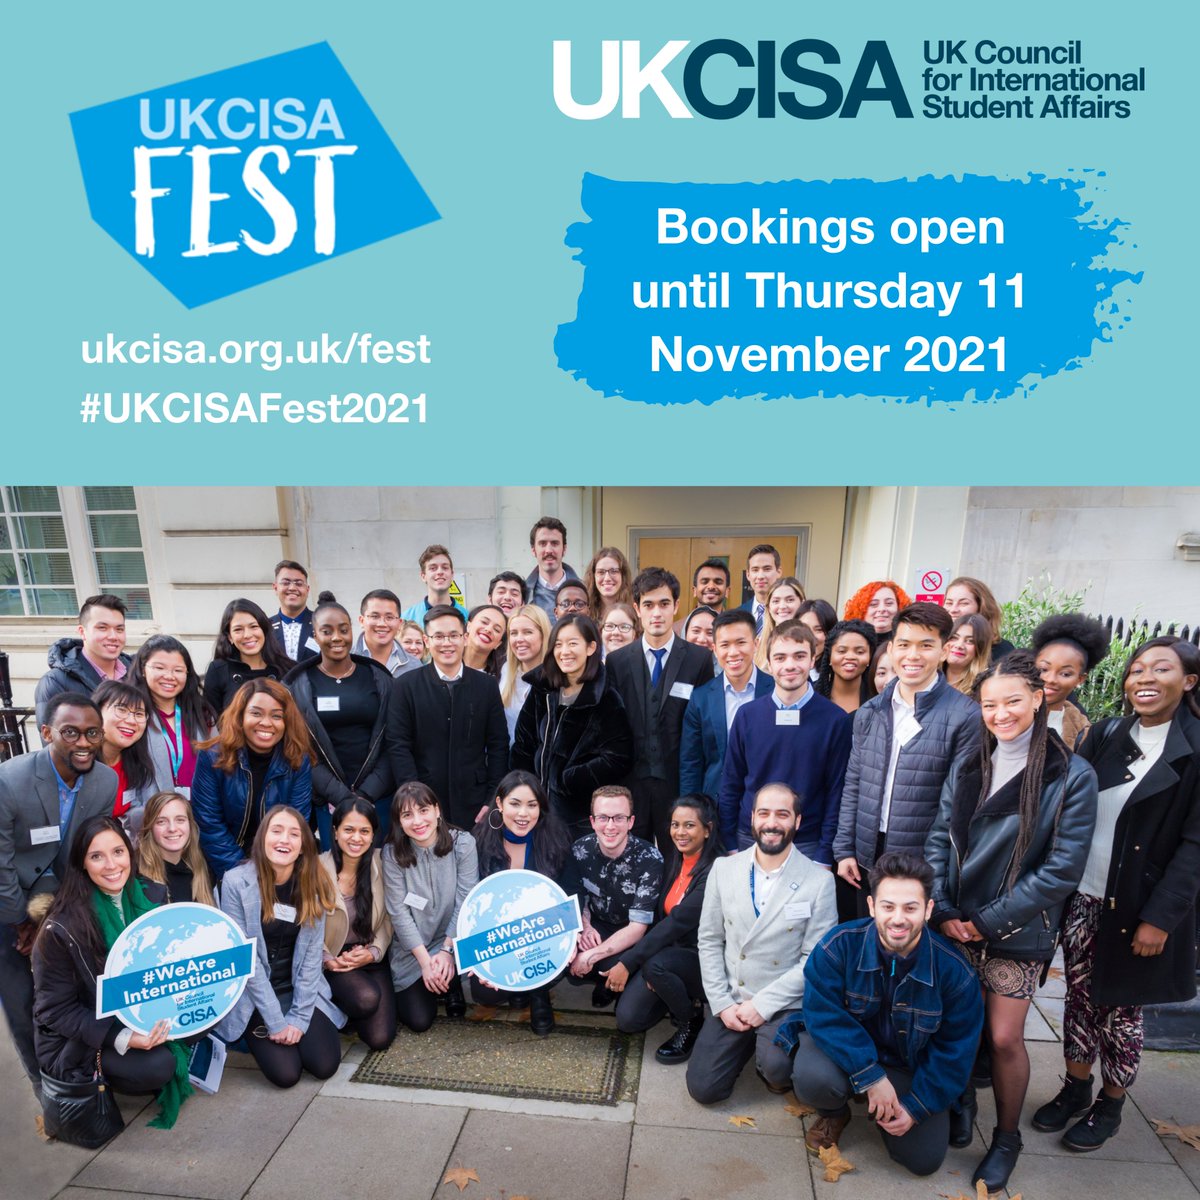 📢 Update #UKCISAFest2021: Bookings extended until 11 November 2021!

🎫 Book your place here: ukcisa.org.uk/fest

#UKCISAFest2021 #UKCISA #WeAreInternational